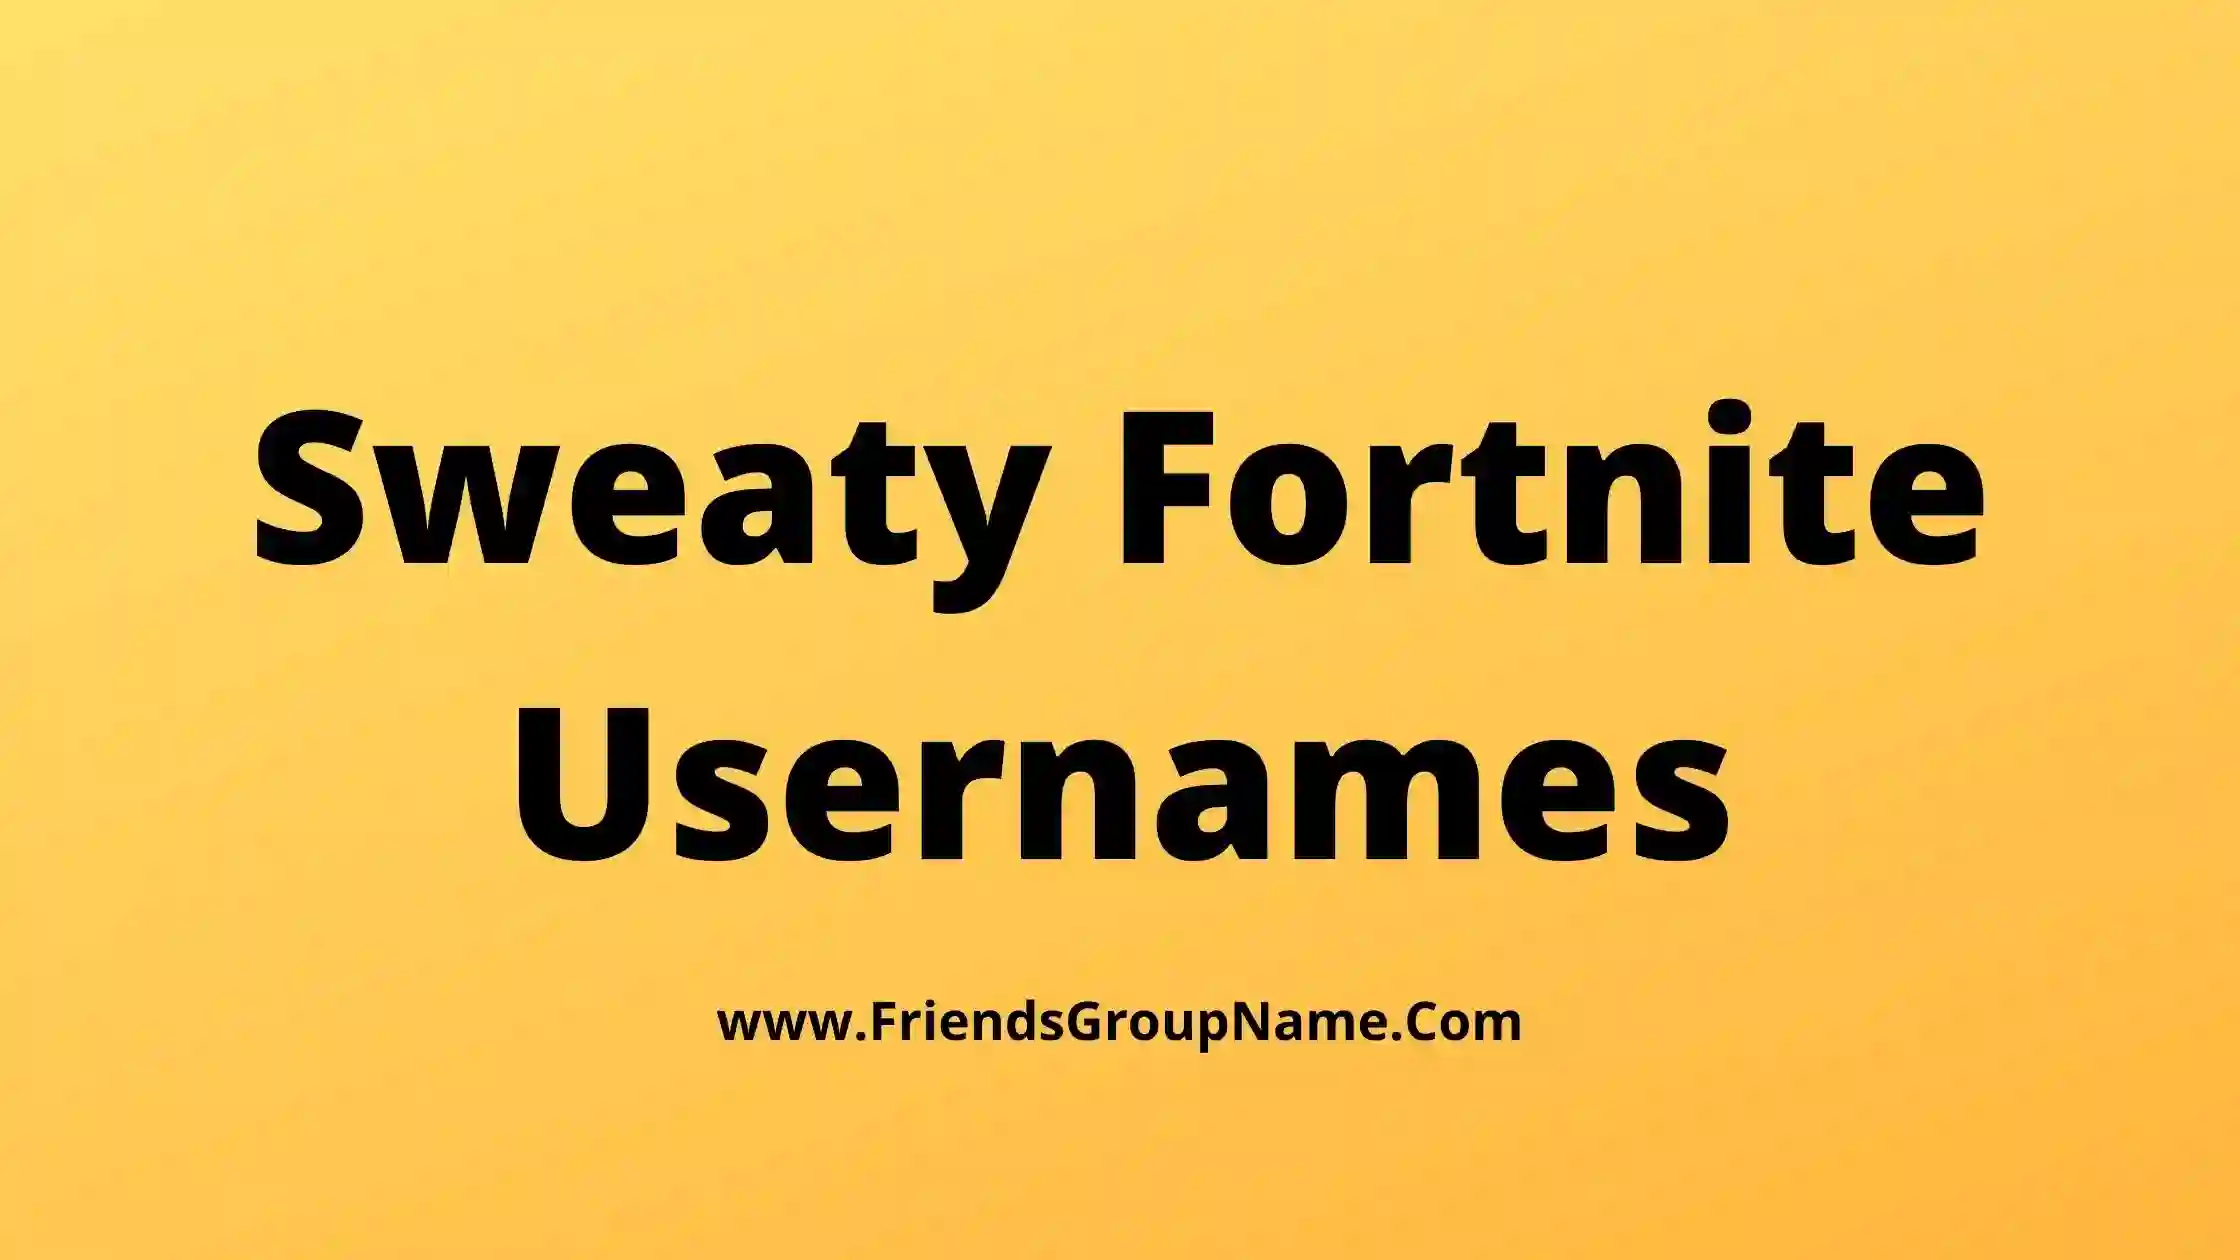 Sweaty Fortnite Usernames